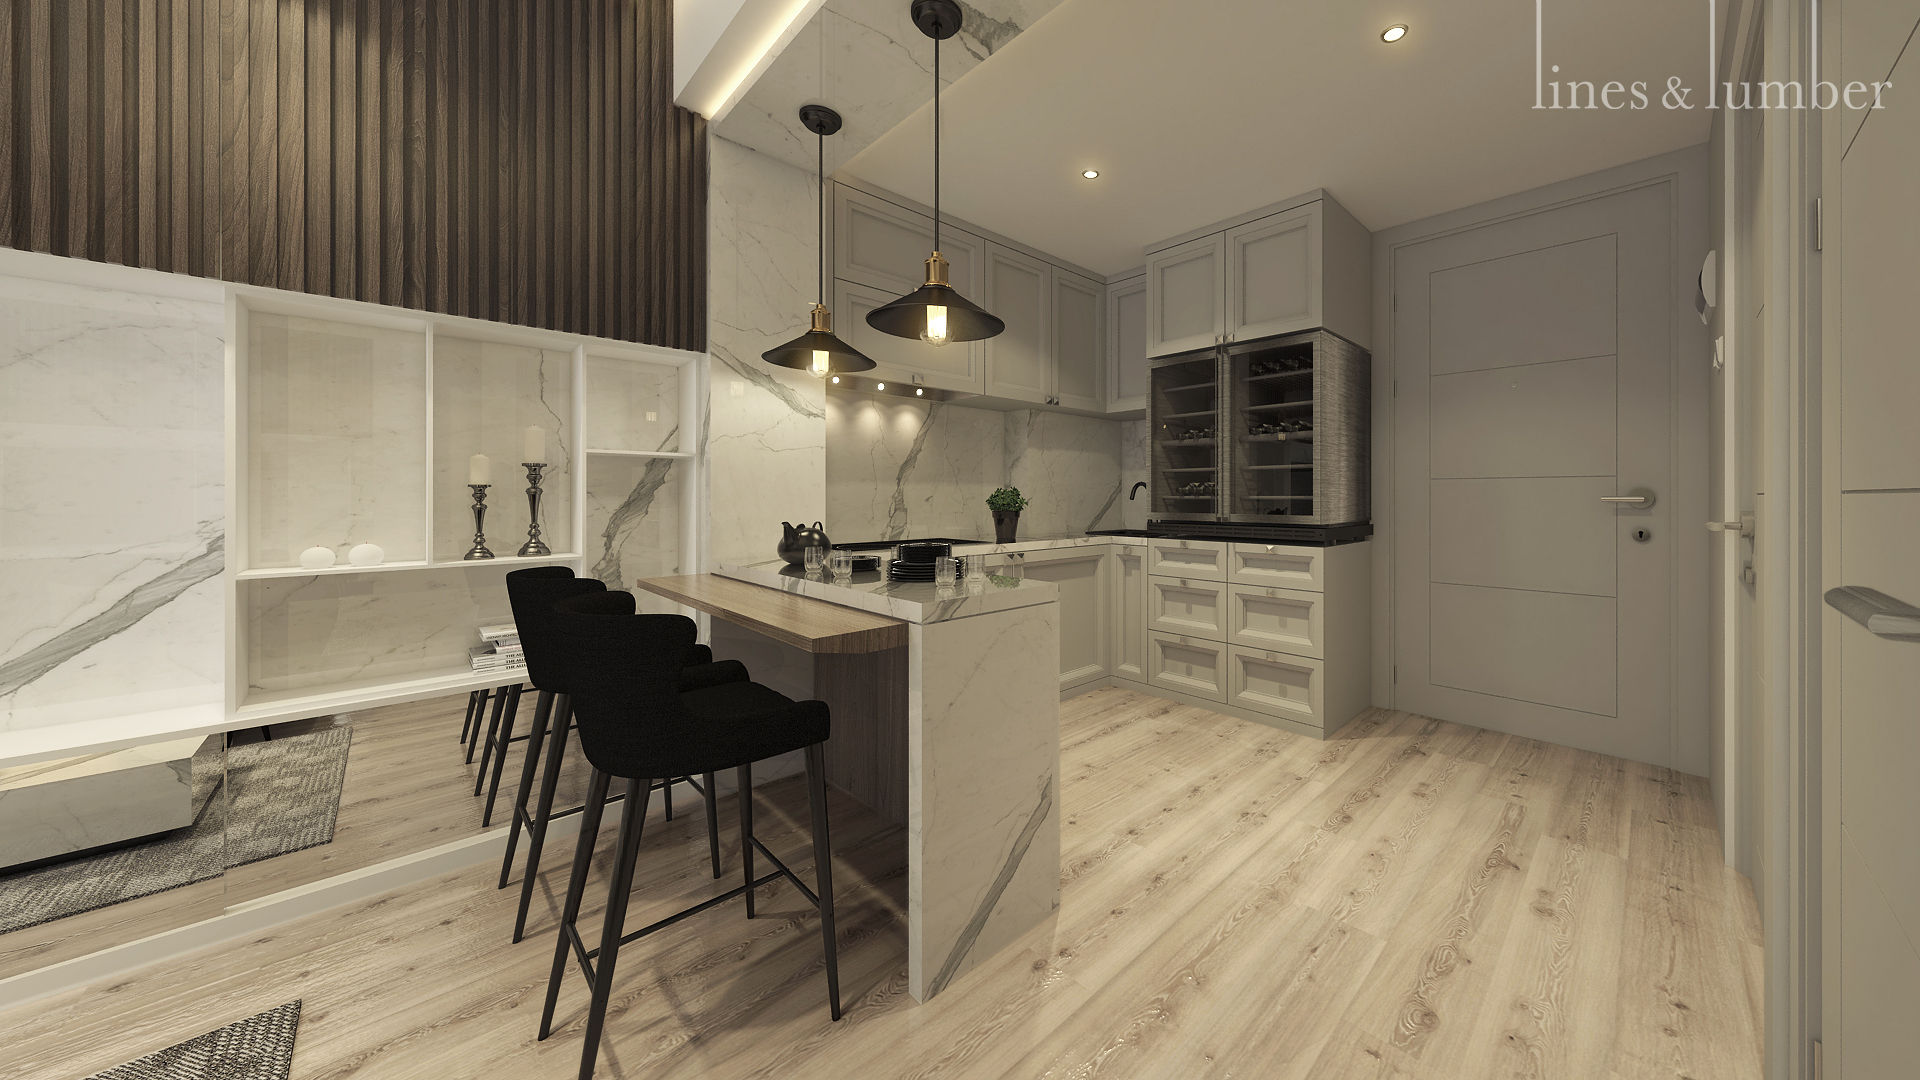 Studio Apartment, Sandalwood Springhill , Lines & Lumber Lines & Lumber Кухня